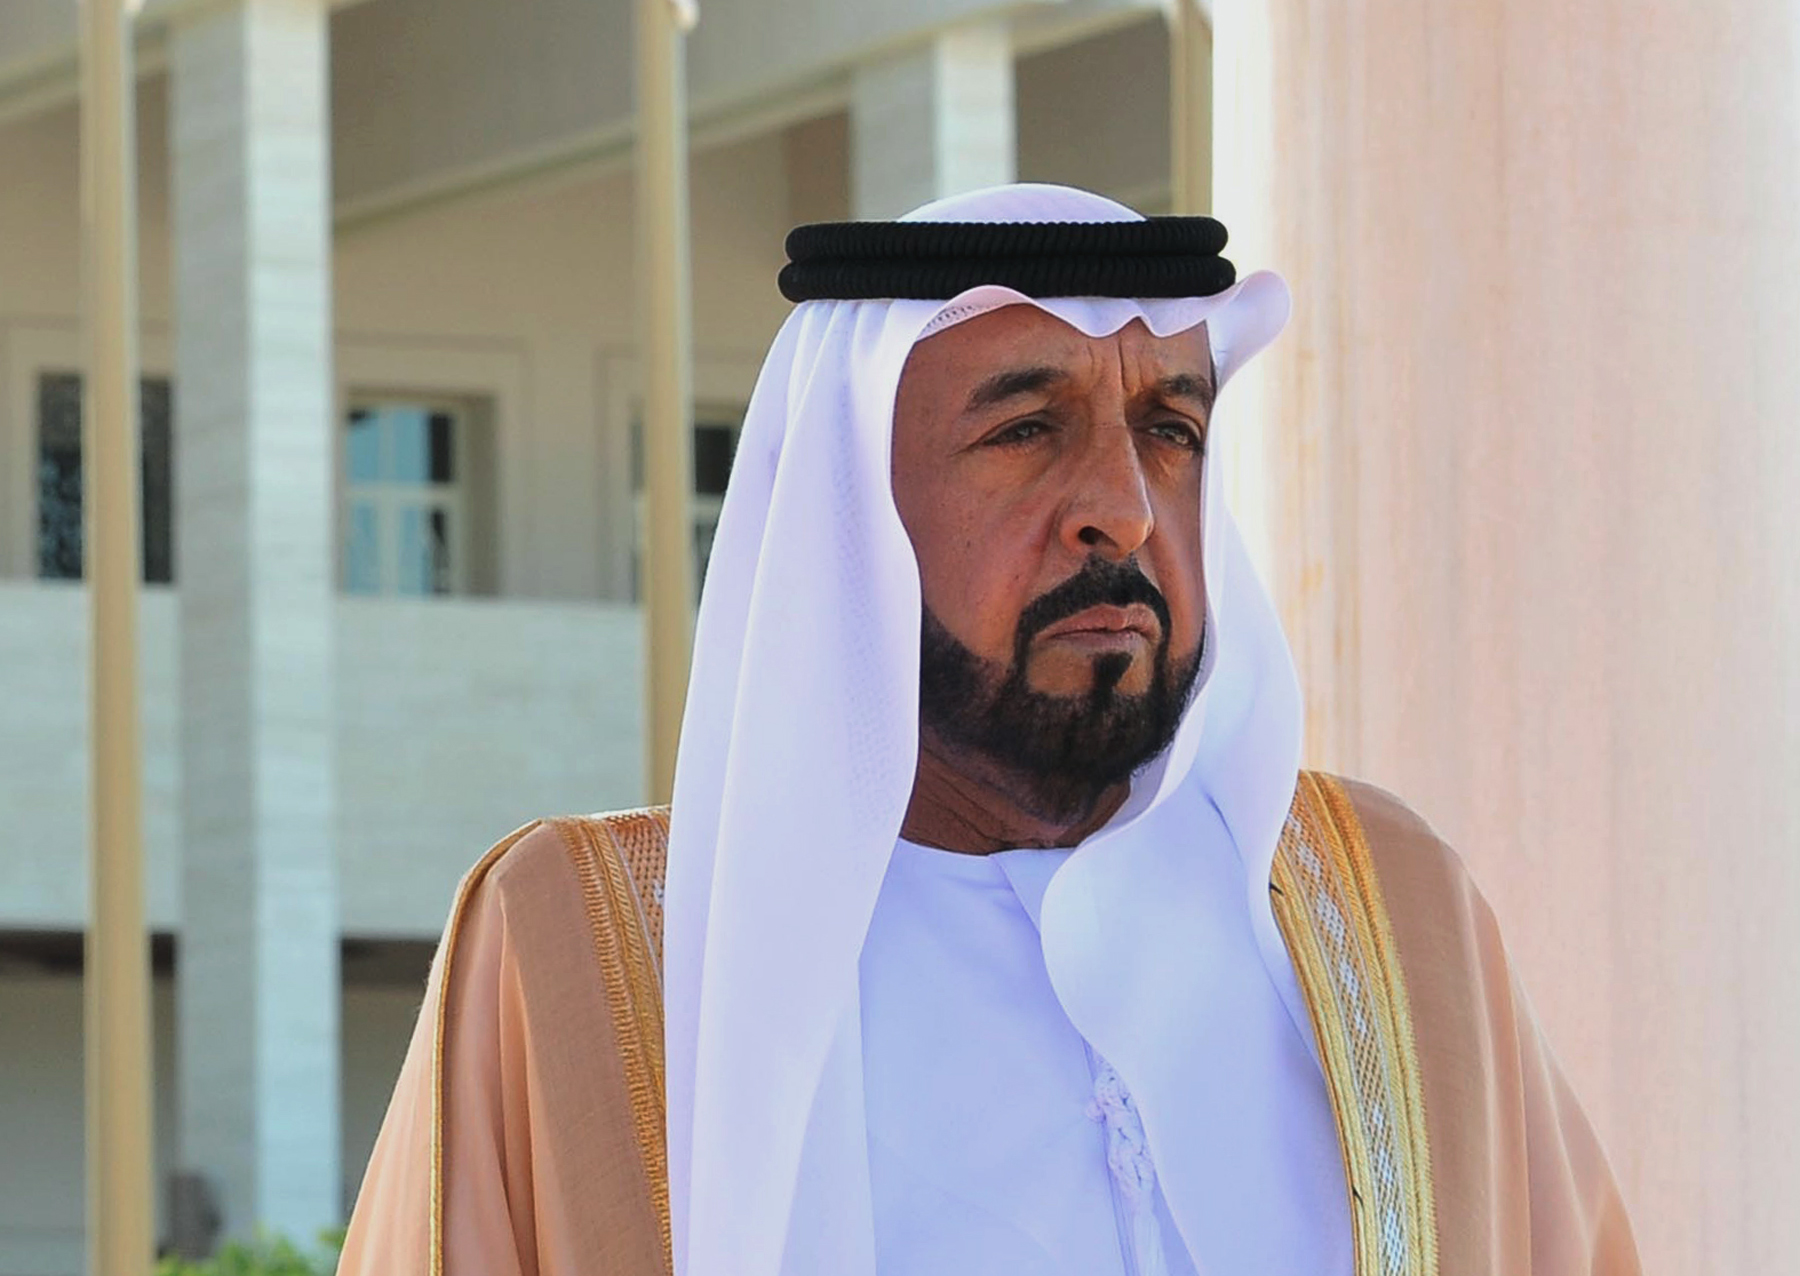 4. Bin Zayed Al Khalifa Nahyan, presedintele Emiratelor Arabe Unite - 15 miliarde $